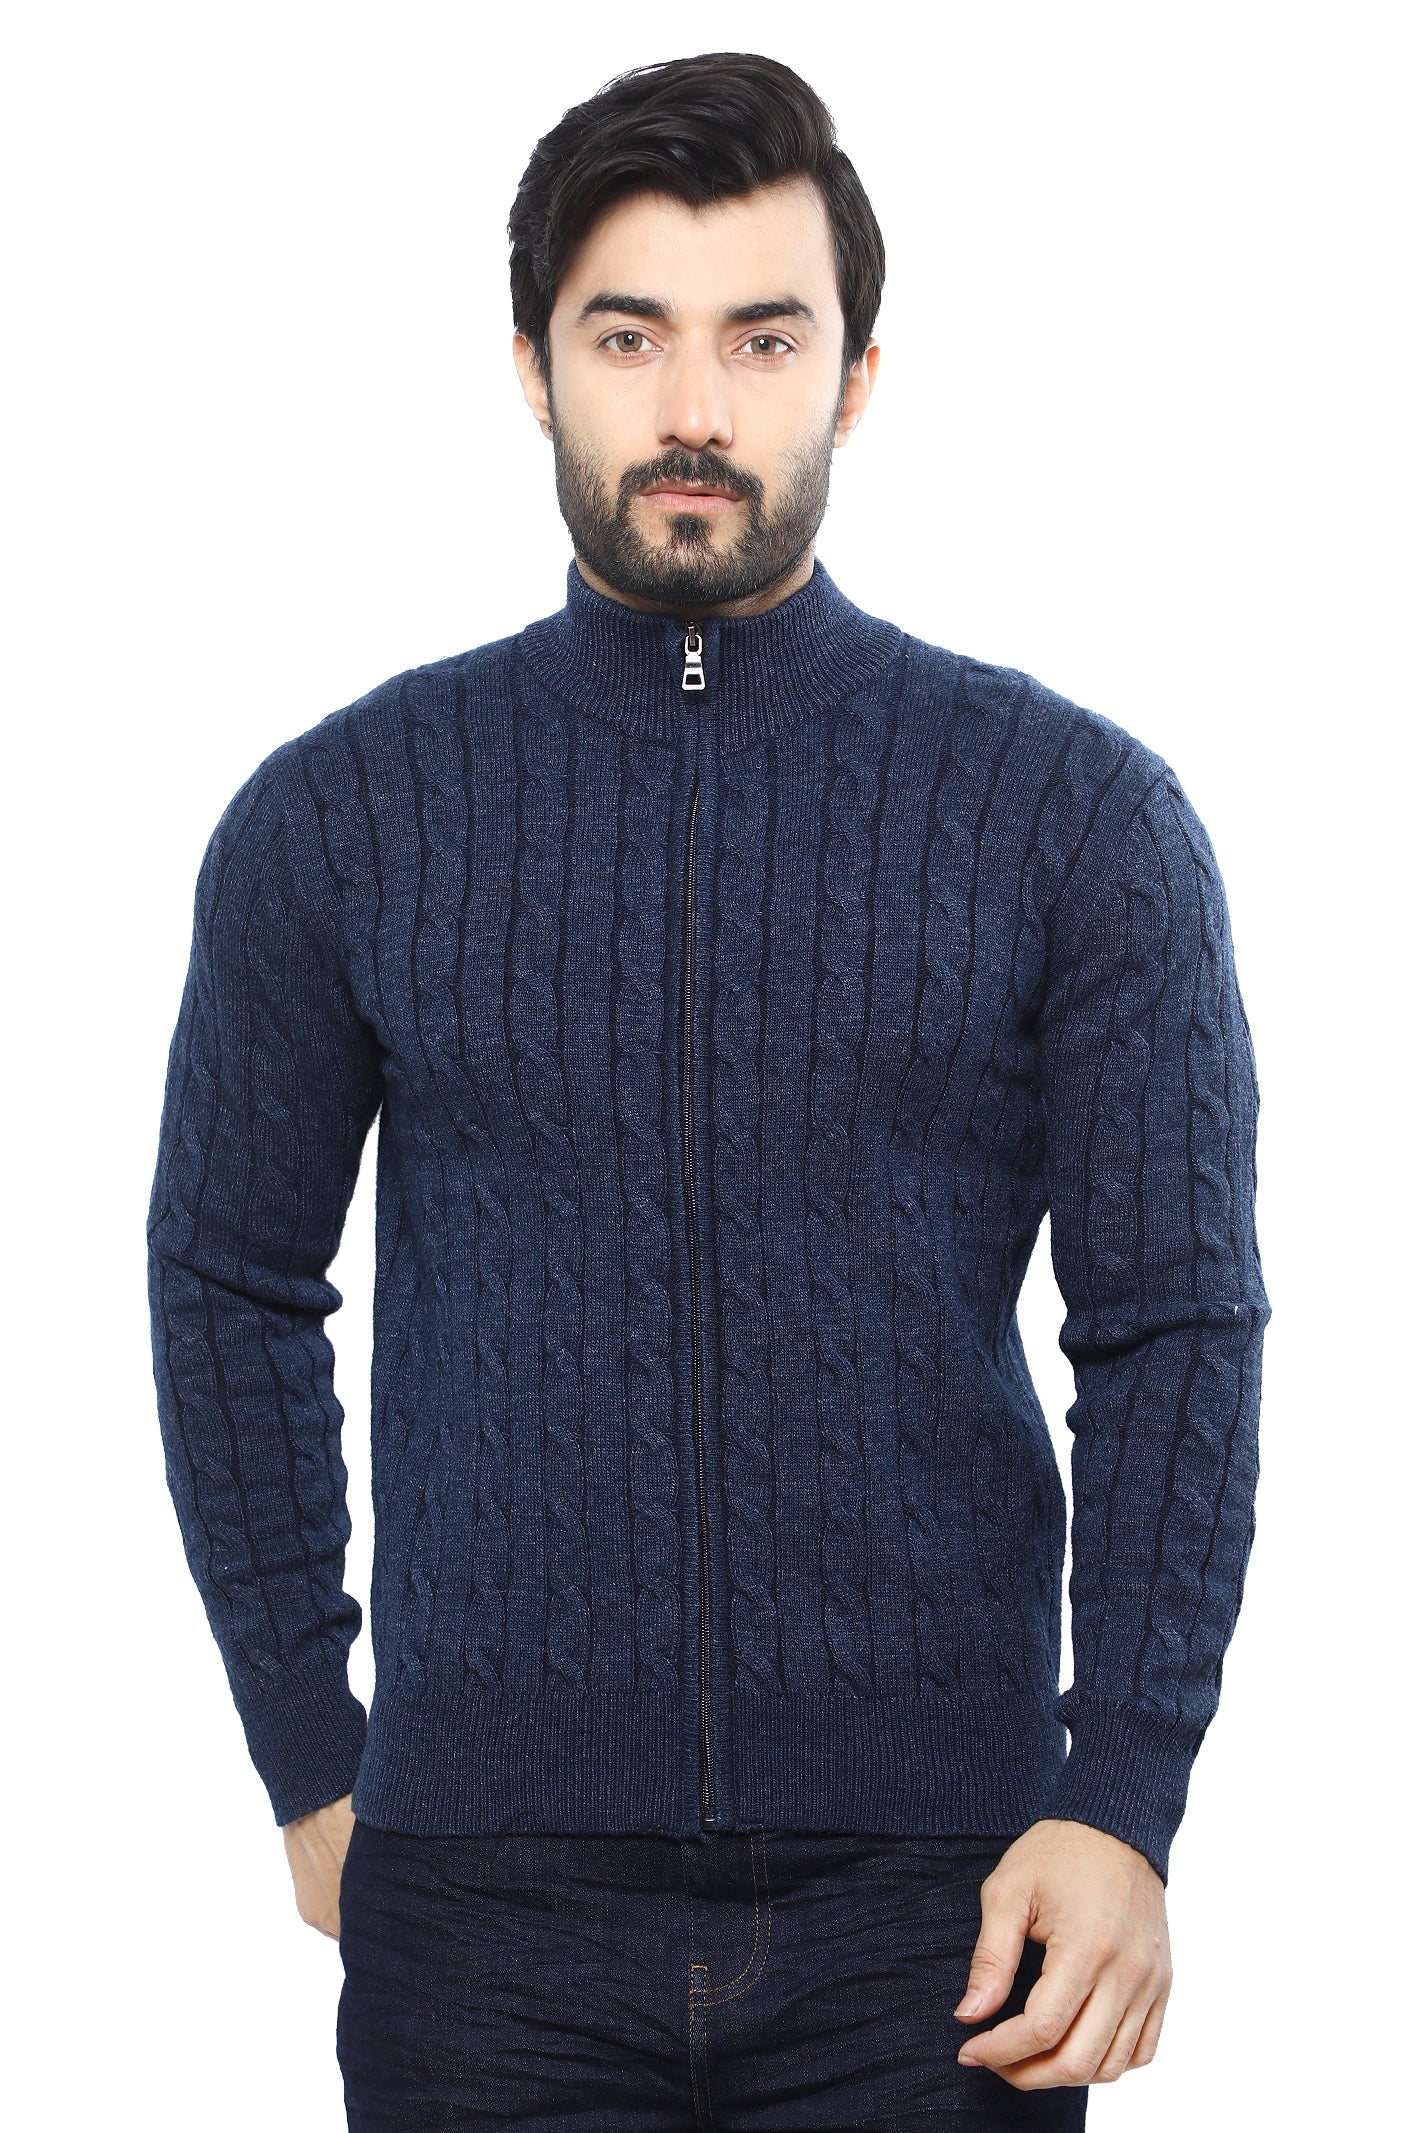 Gents Sweater SKU: SA588-D-BLUE - Diners